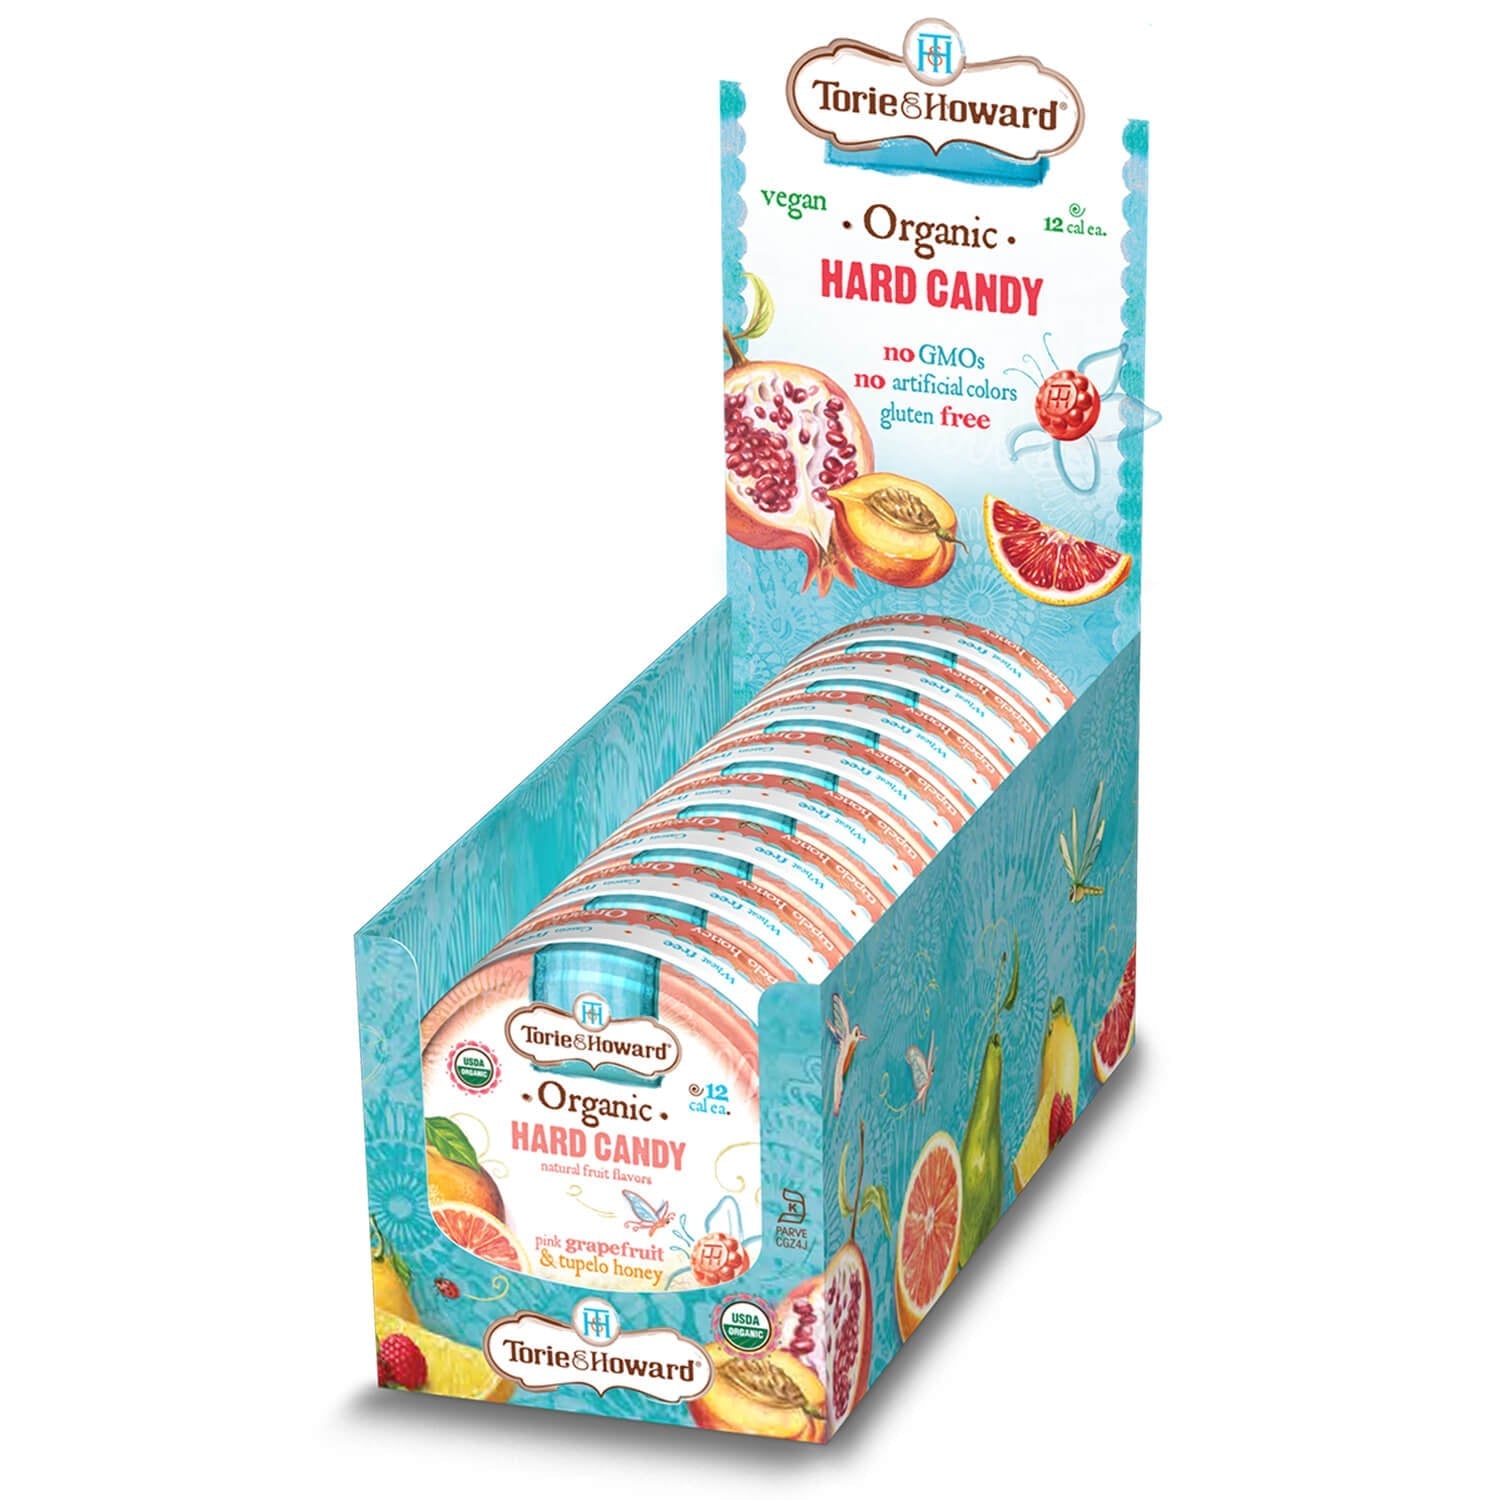 Torie & Howard Grapefruit and Tupelo Honey Organic Hard Candy 2oz Tins (8ct Box)